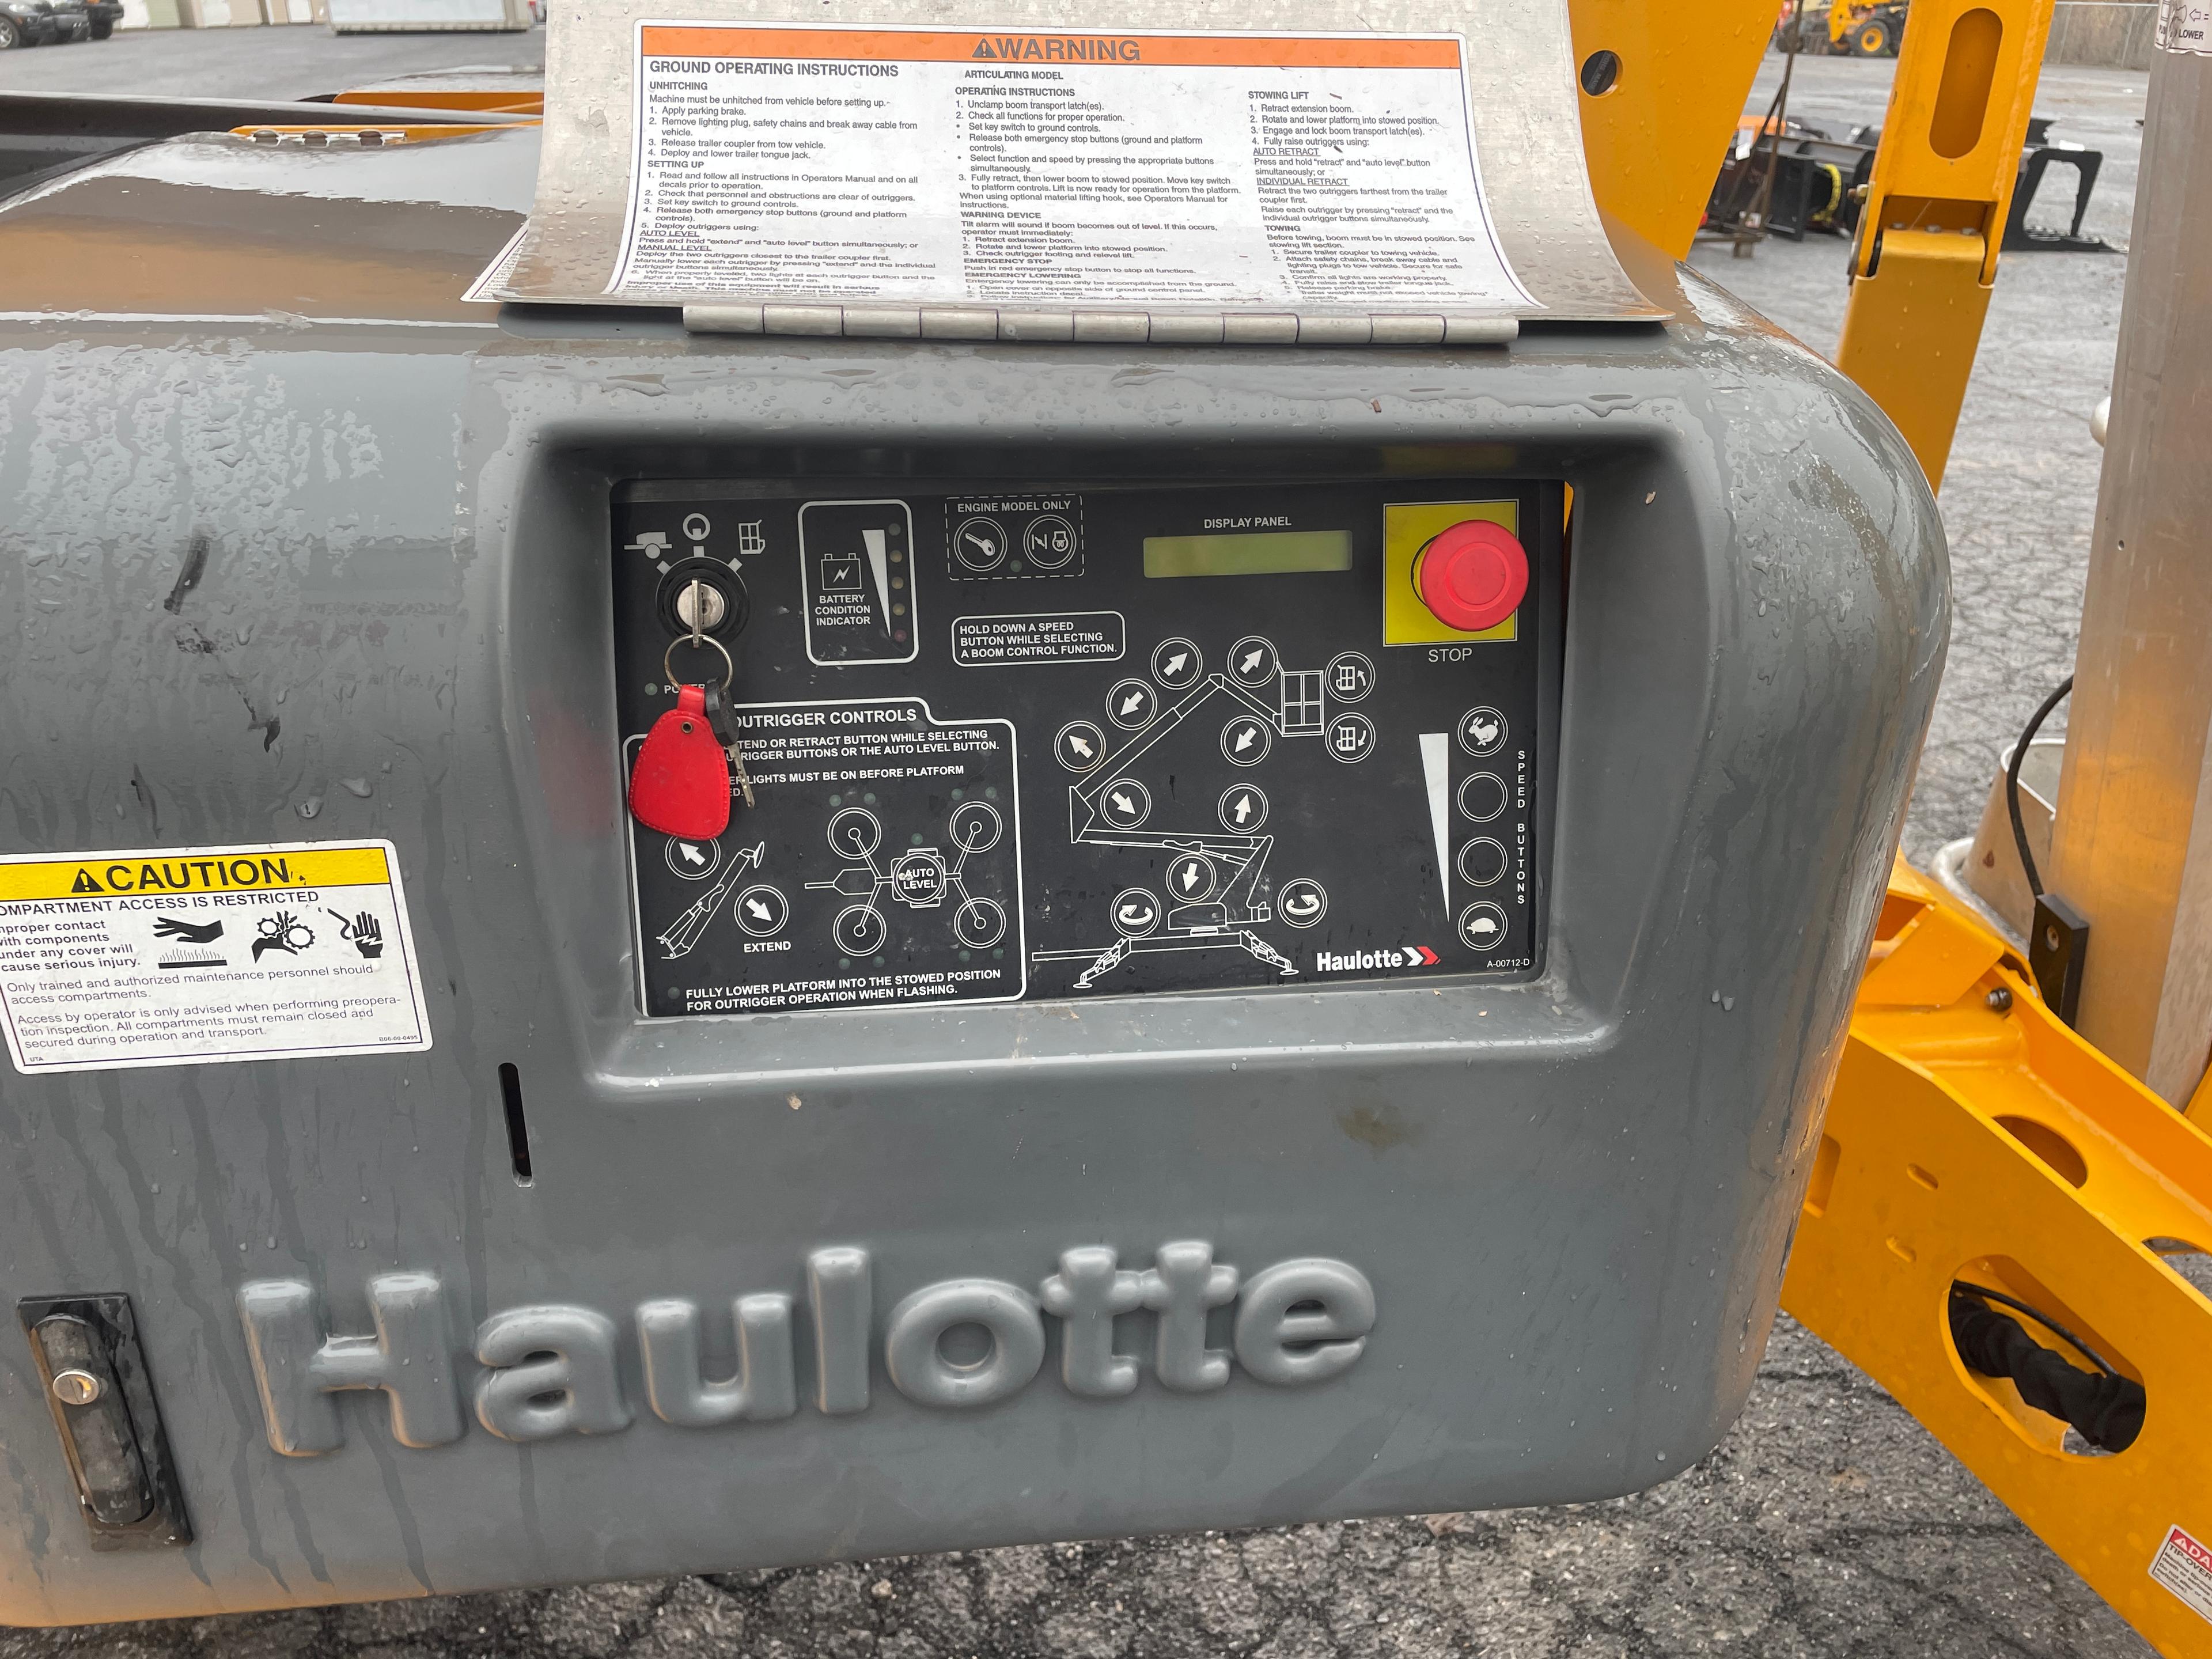 2021 Haulotte 5533A Towable Boom Lift